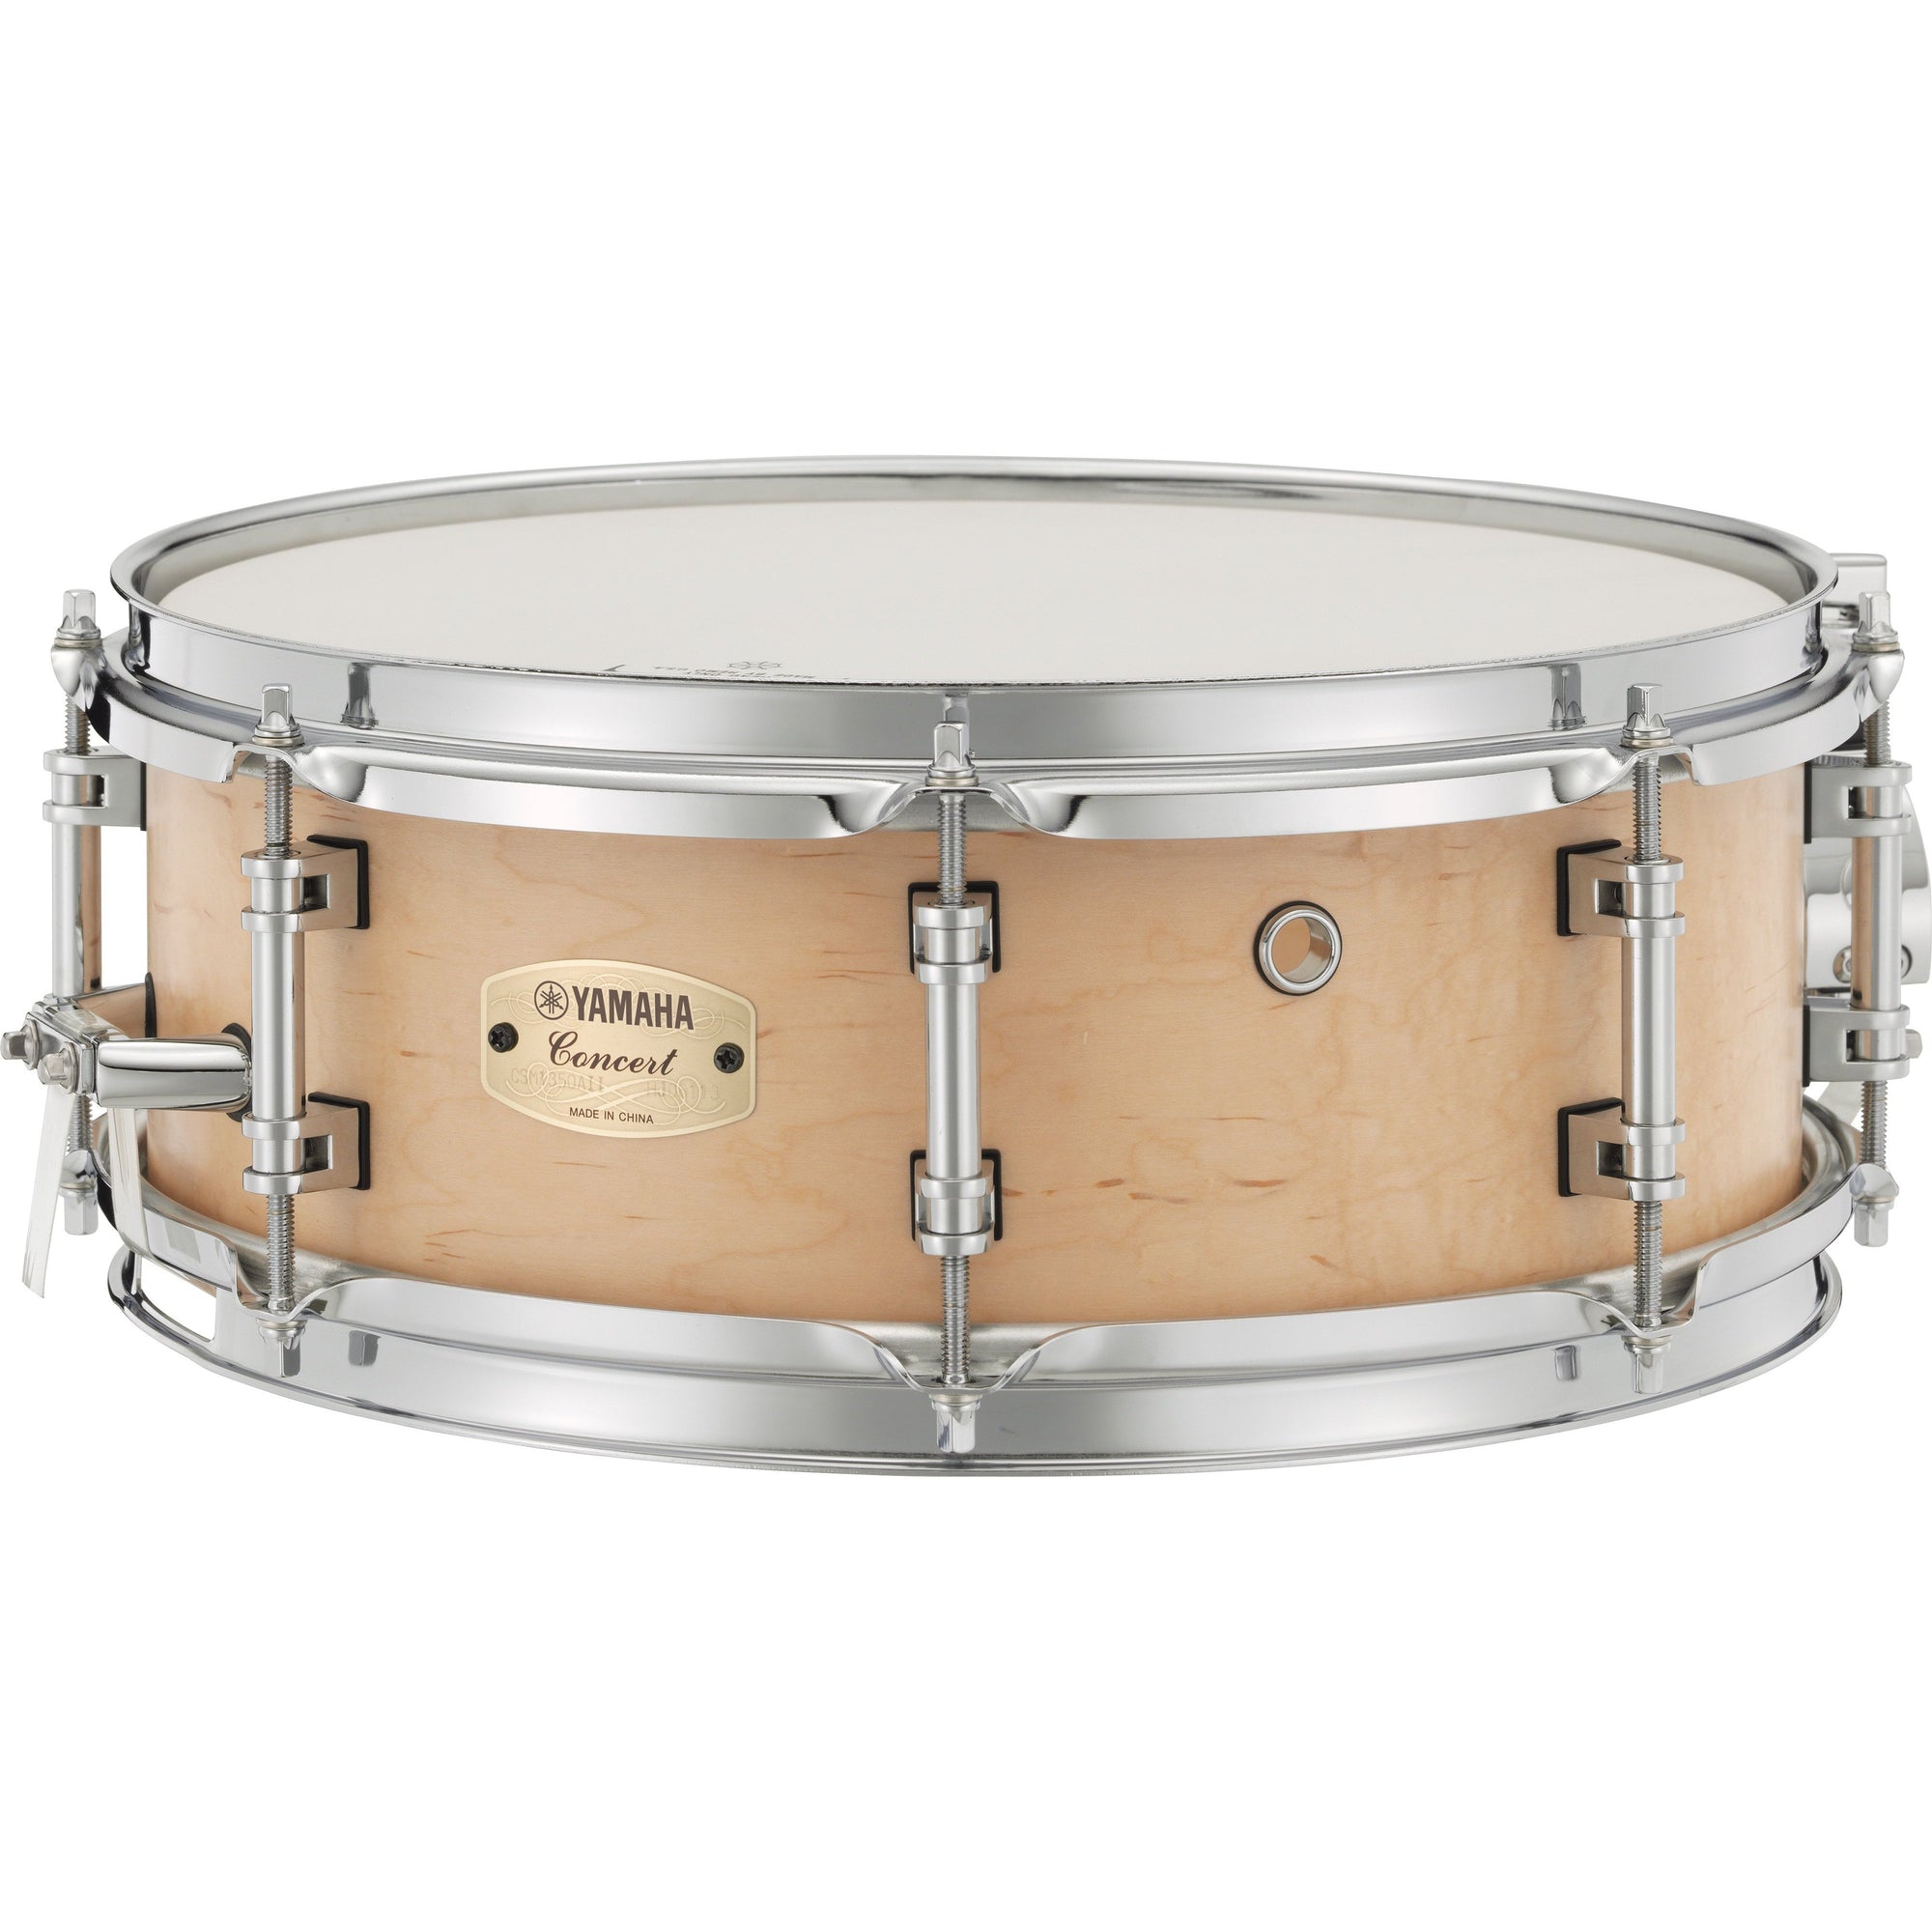 Yamaha - CSM-1350AII - Snare Drum-Percussion-Yamaha-Music Elements